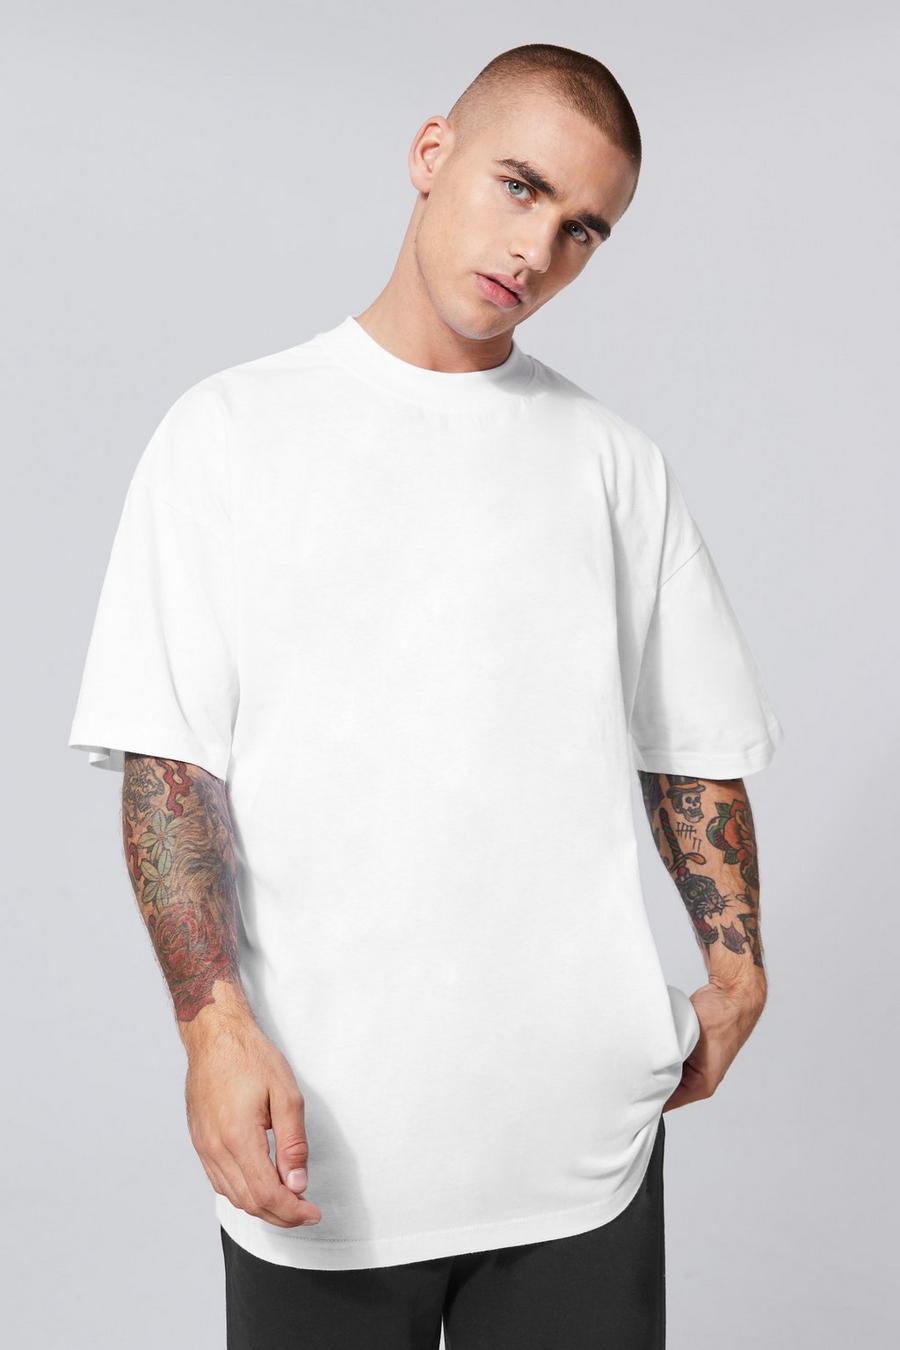 https://media.boohoo.com/i/boohoo/bmm32998_white_xl/male-white-oversized-extended-neck-t-shirt/?w=900&qlt=default&fmt.jp2.qlt=70&fmt=auto&sm=fit